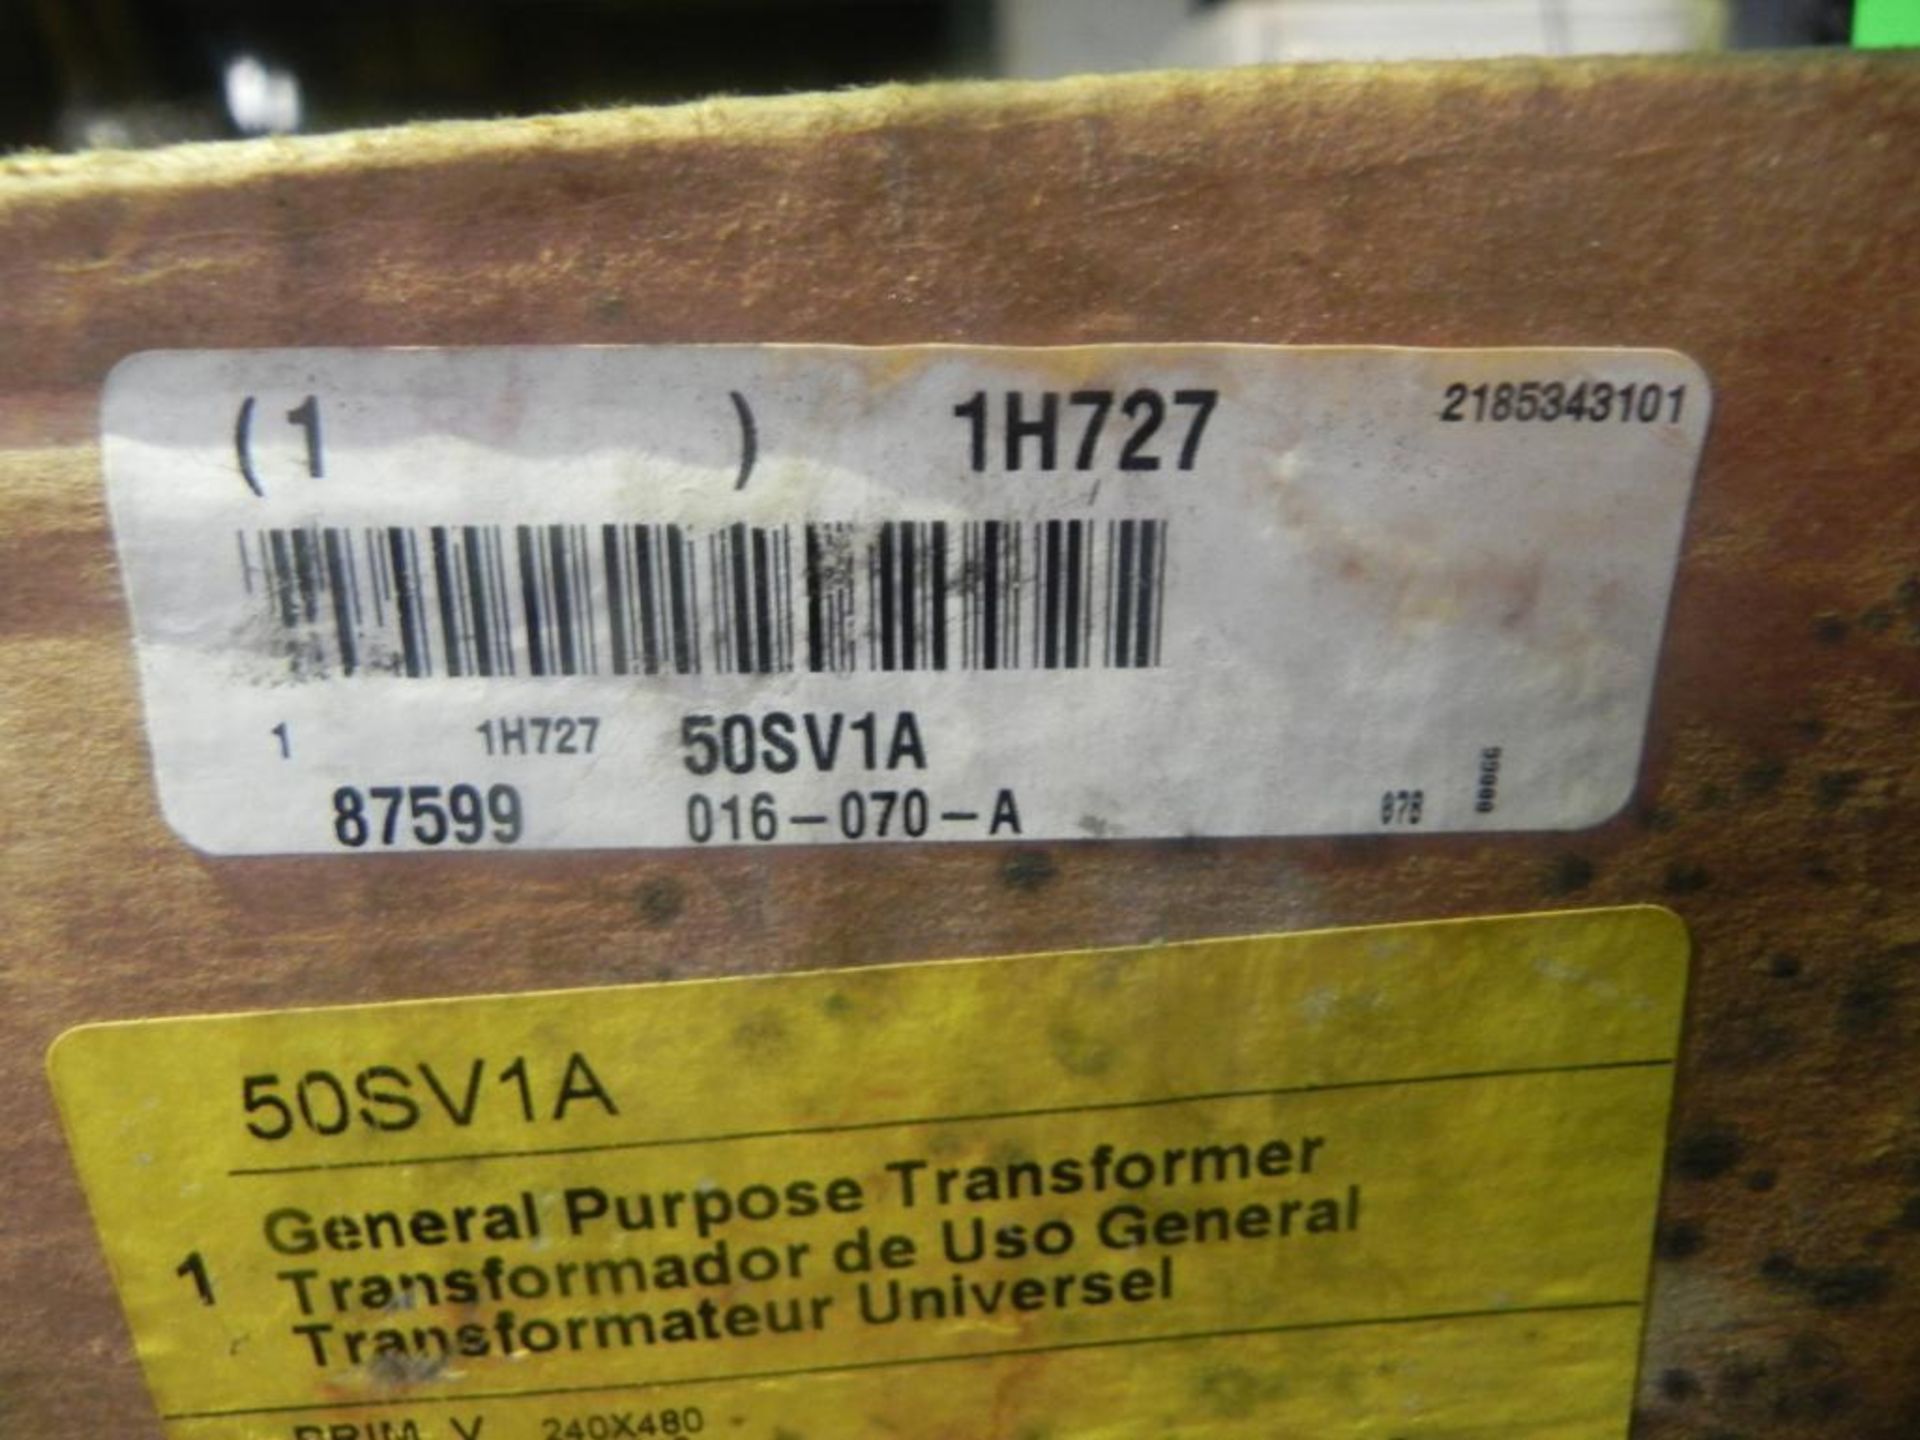 Square D General Purpose Transformer mdl 50 5V1A 0.50 KVA Phase 1 Frequency: 60HZ Ins Class 105 Deg - Bild 4 aus 6